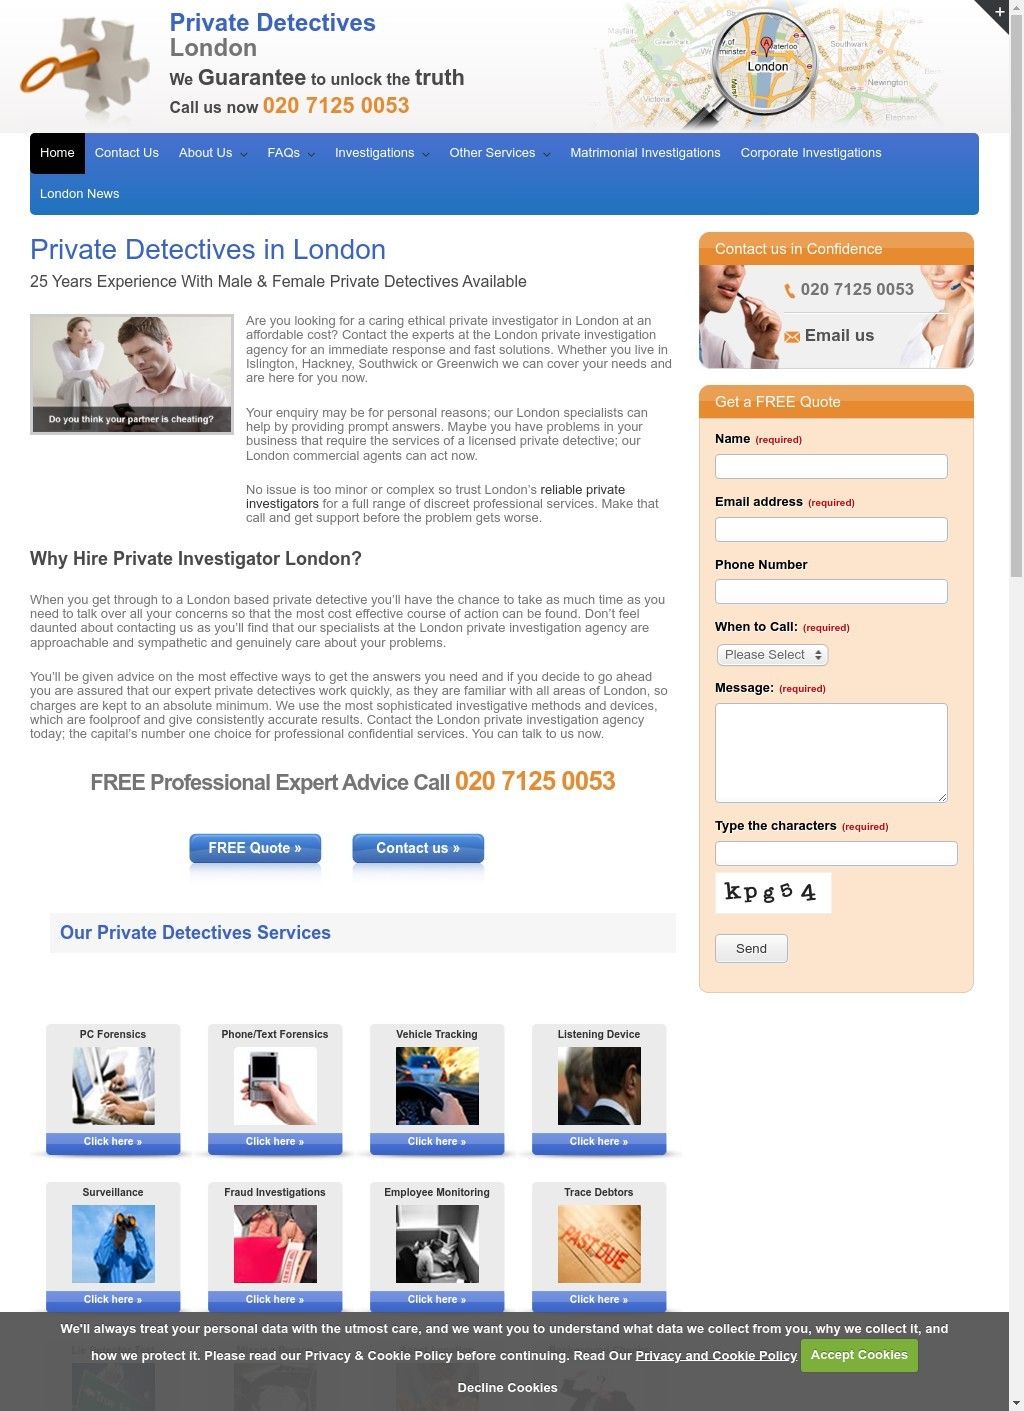 London Private Detectives